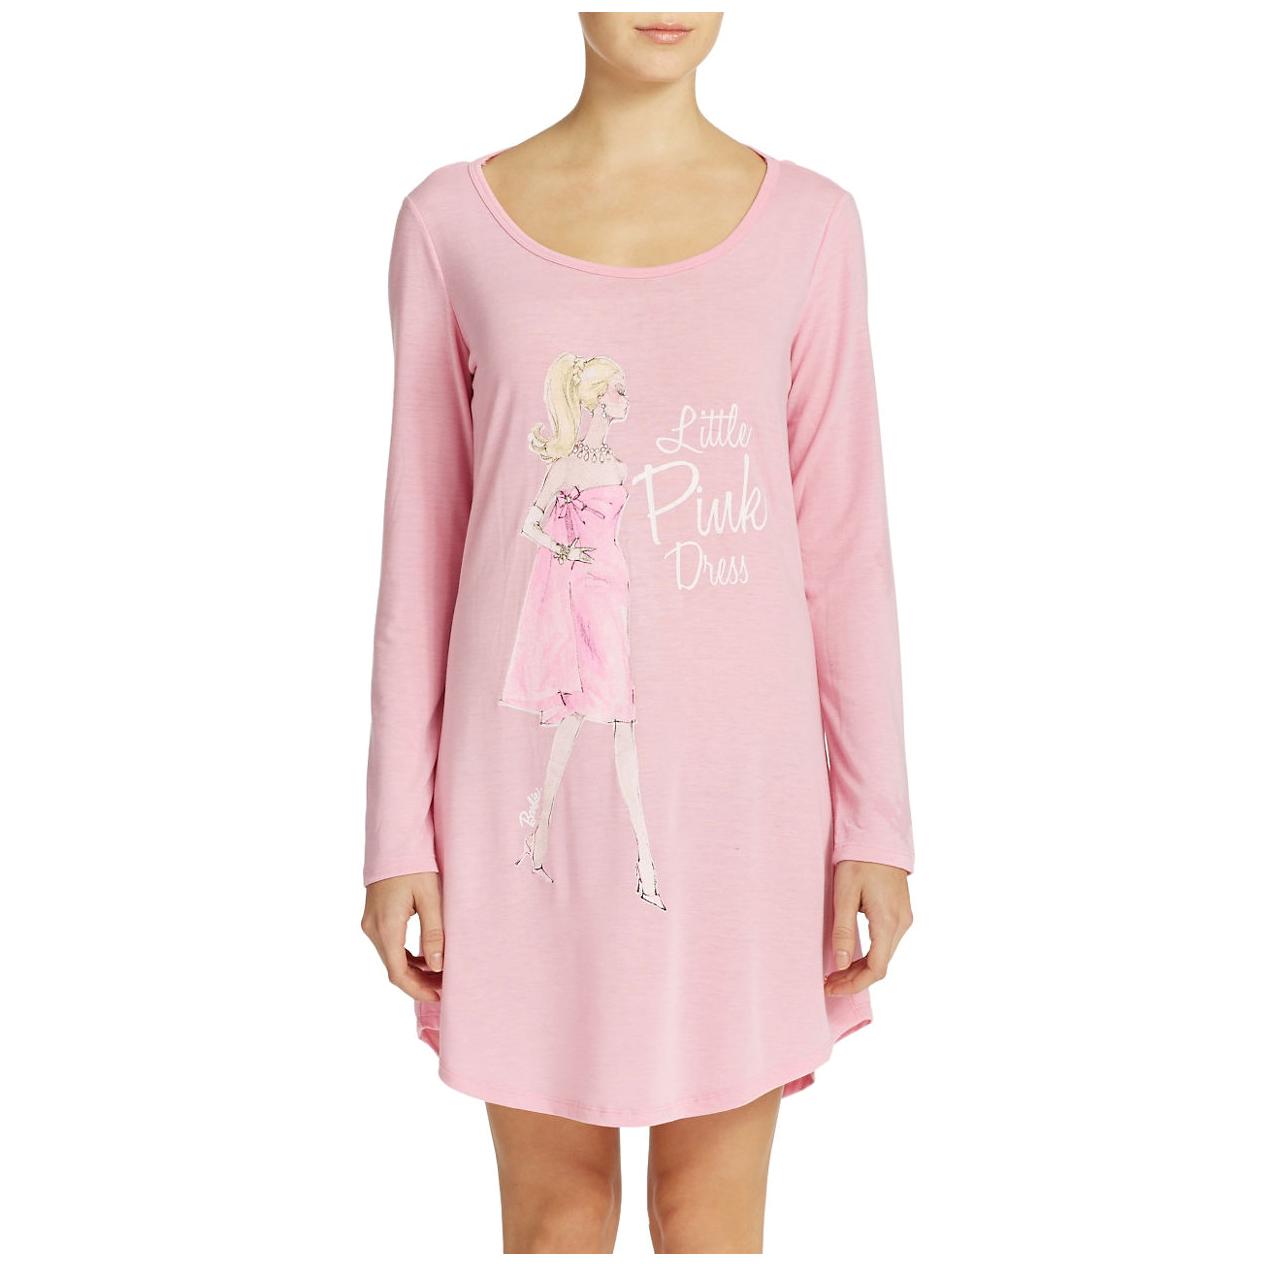 Mattel Barbie Adult L S Knit Pink Sleep Shirt Night Gown Movie Mixer Graphic Nwt